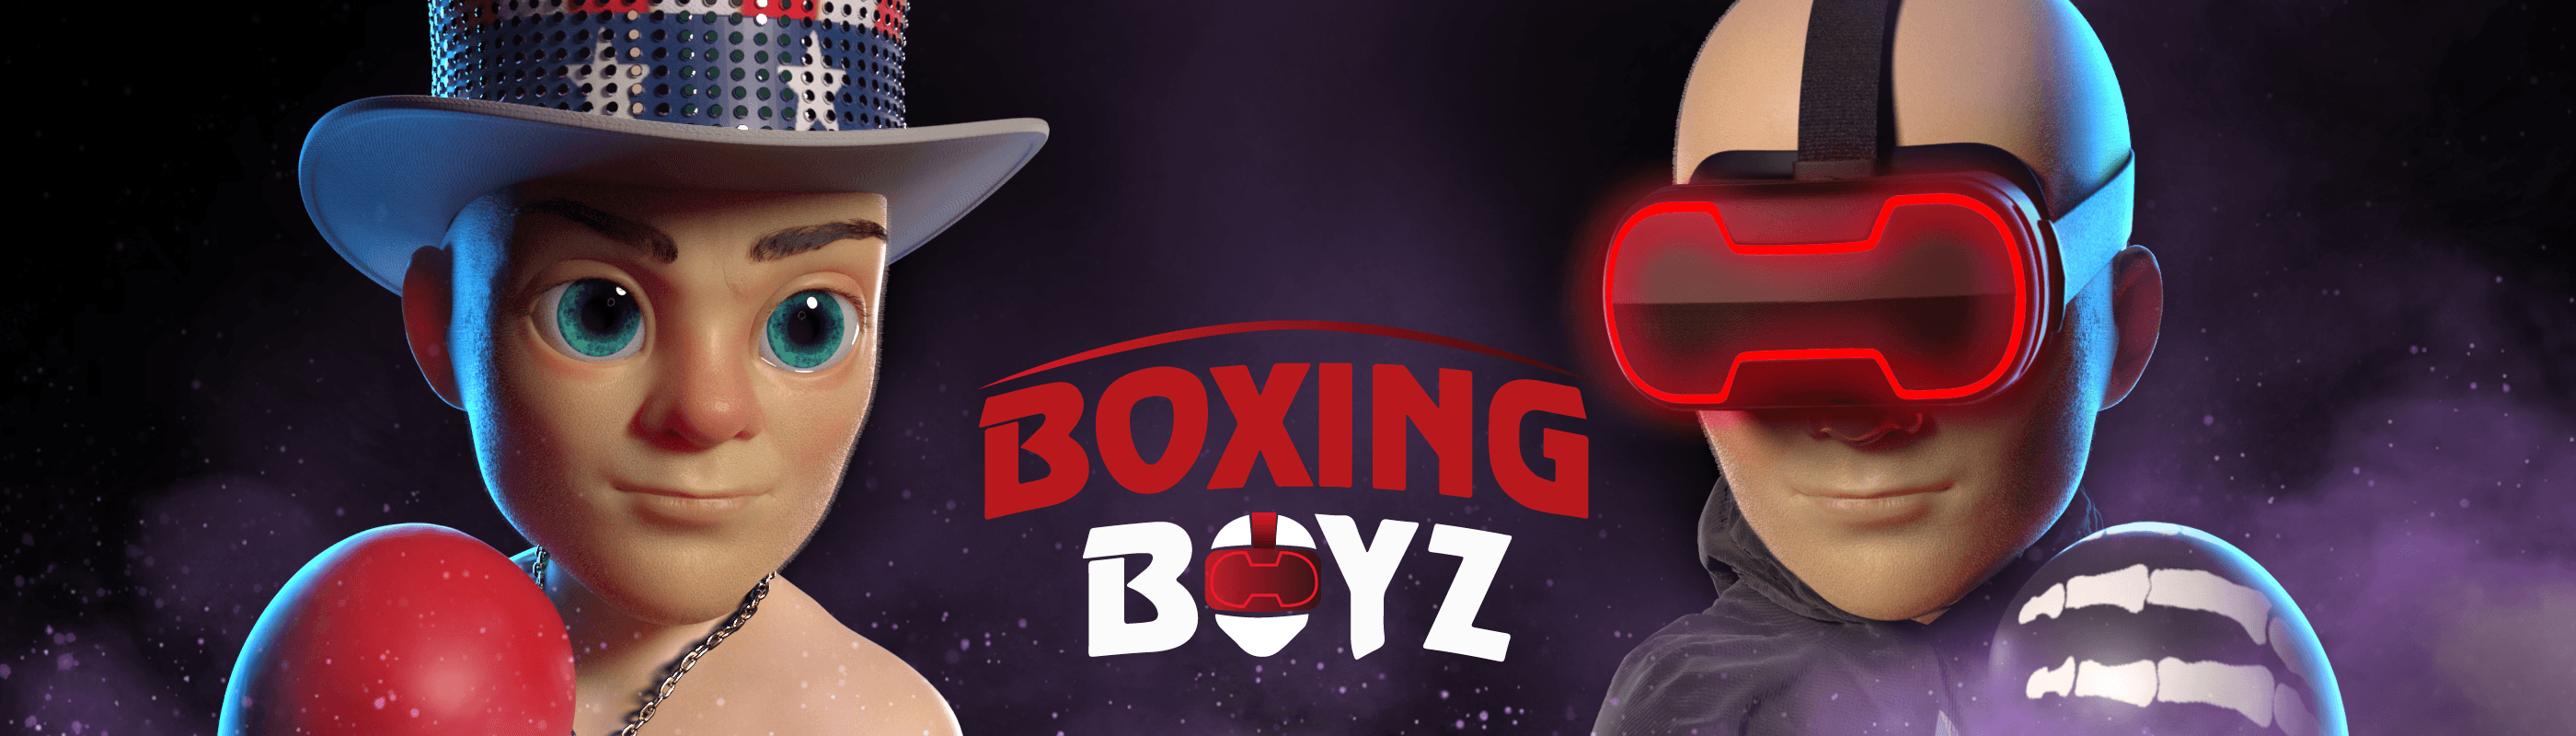 BoxingBoyz Custom